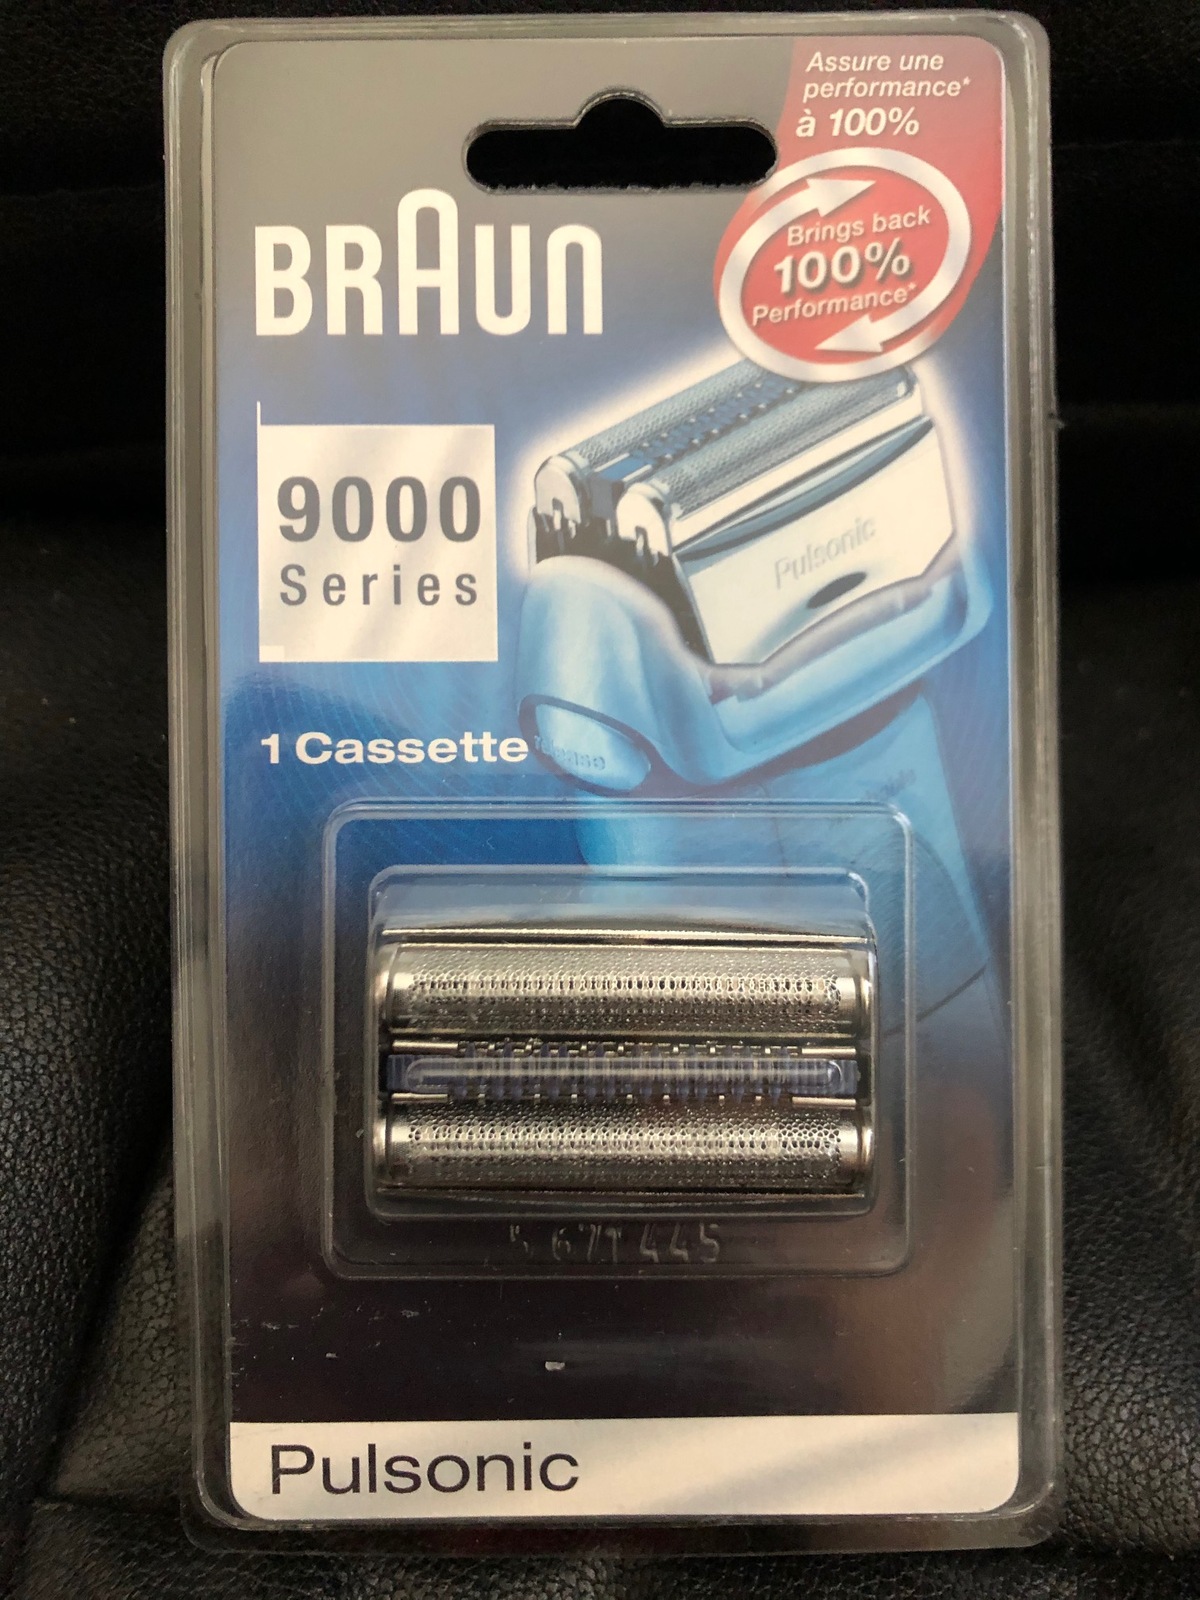 Braun 9000 Series -Pulsonic- Fits All 9000 Series Shavers (Pulsonic) - $50.00